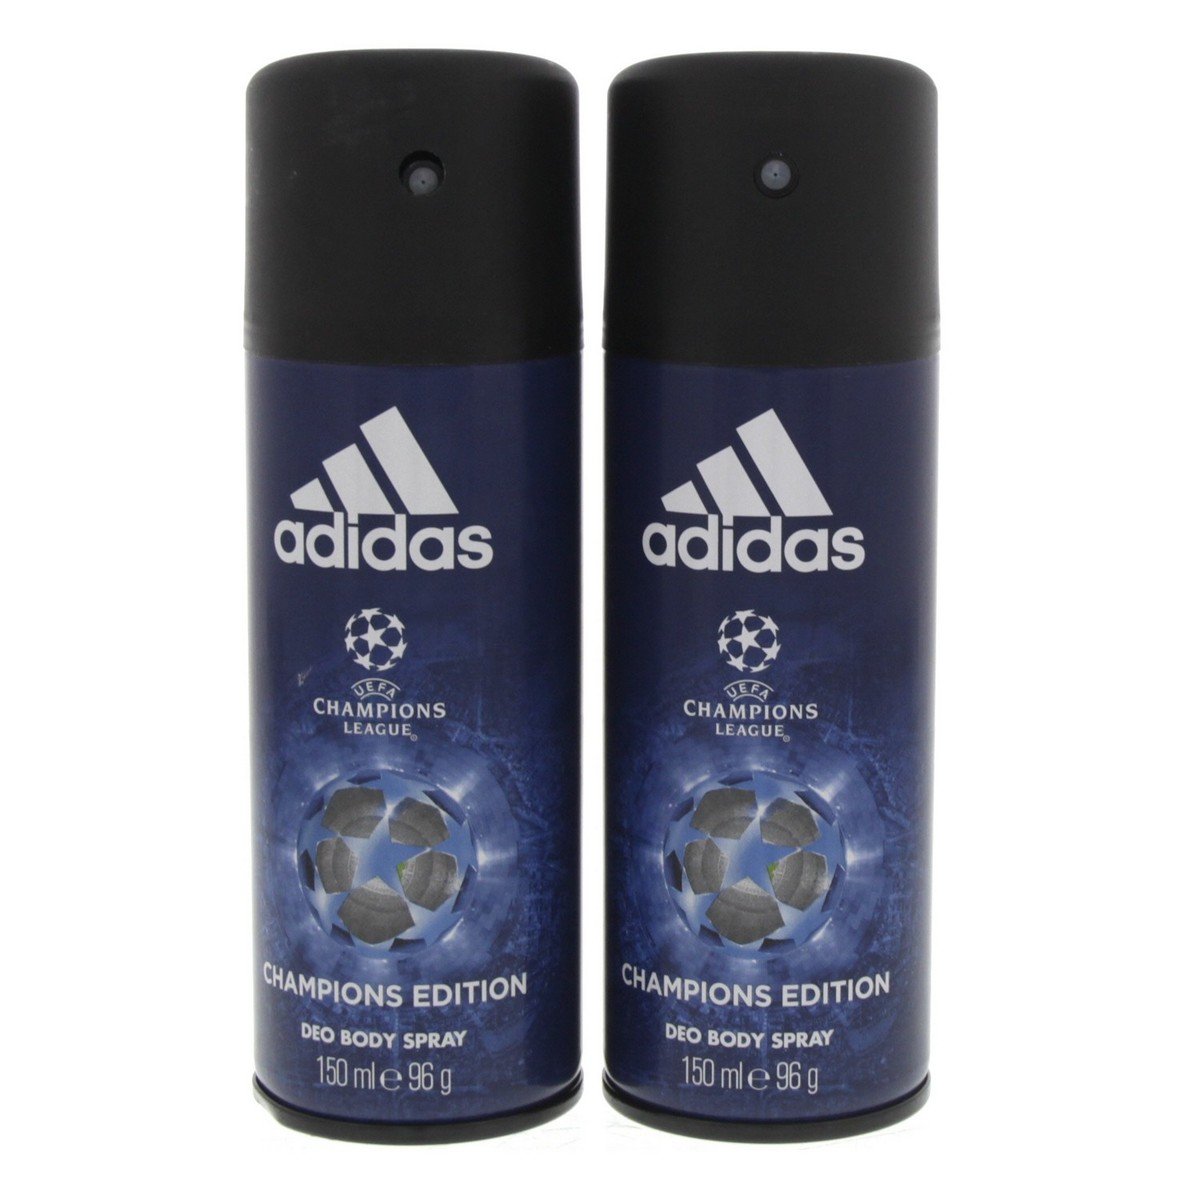 Adidas UEFA Champions League Champions Edition Mens Deo Body Spray 2 x 150 ml